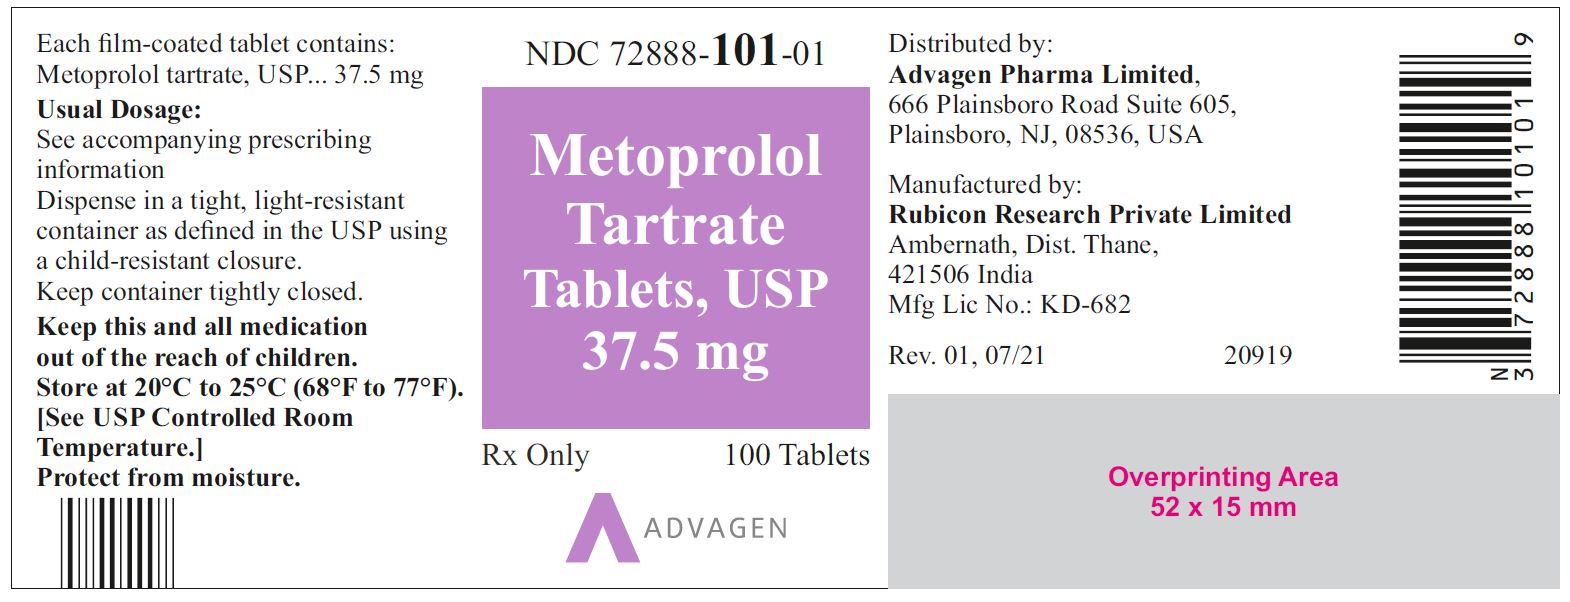 NDC 72888-101-01 - Metoprolol Tartrate Tablets, USP 37.5 mg - 100 Tablets